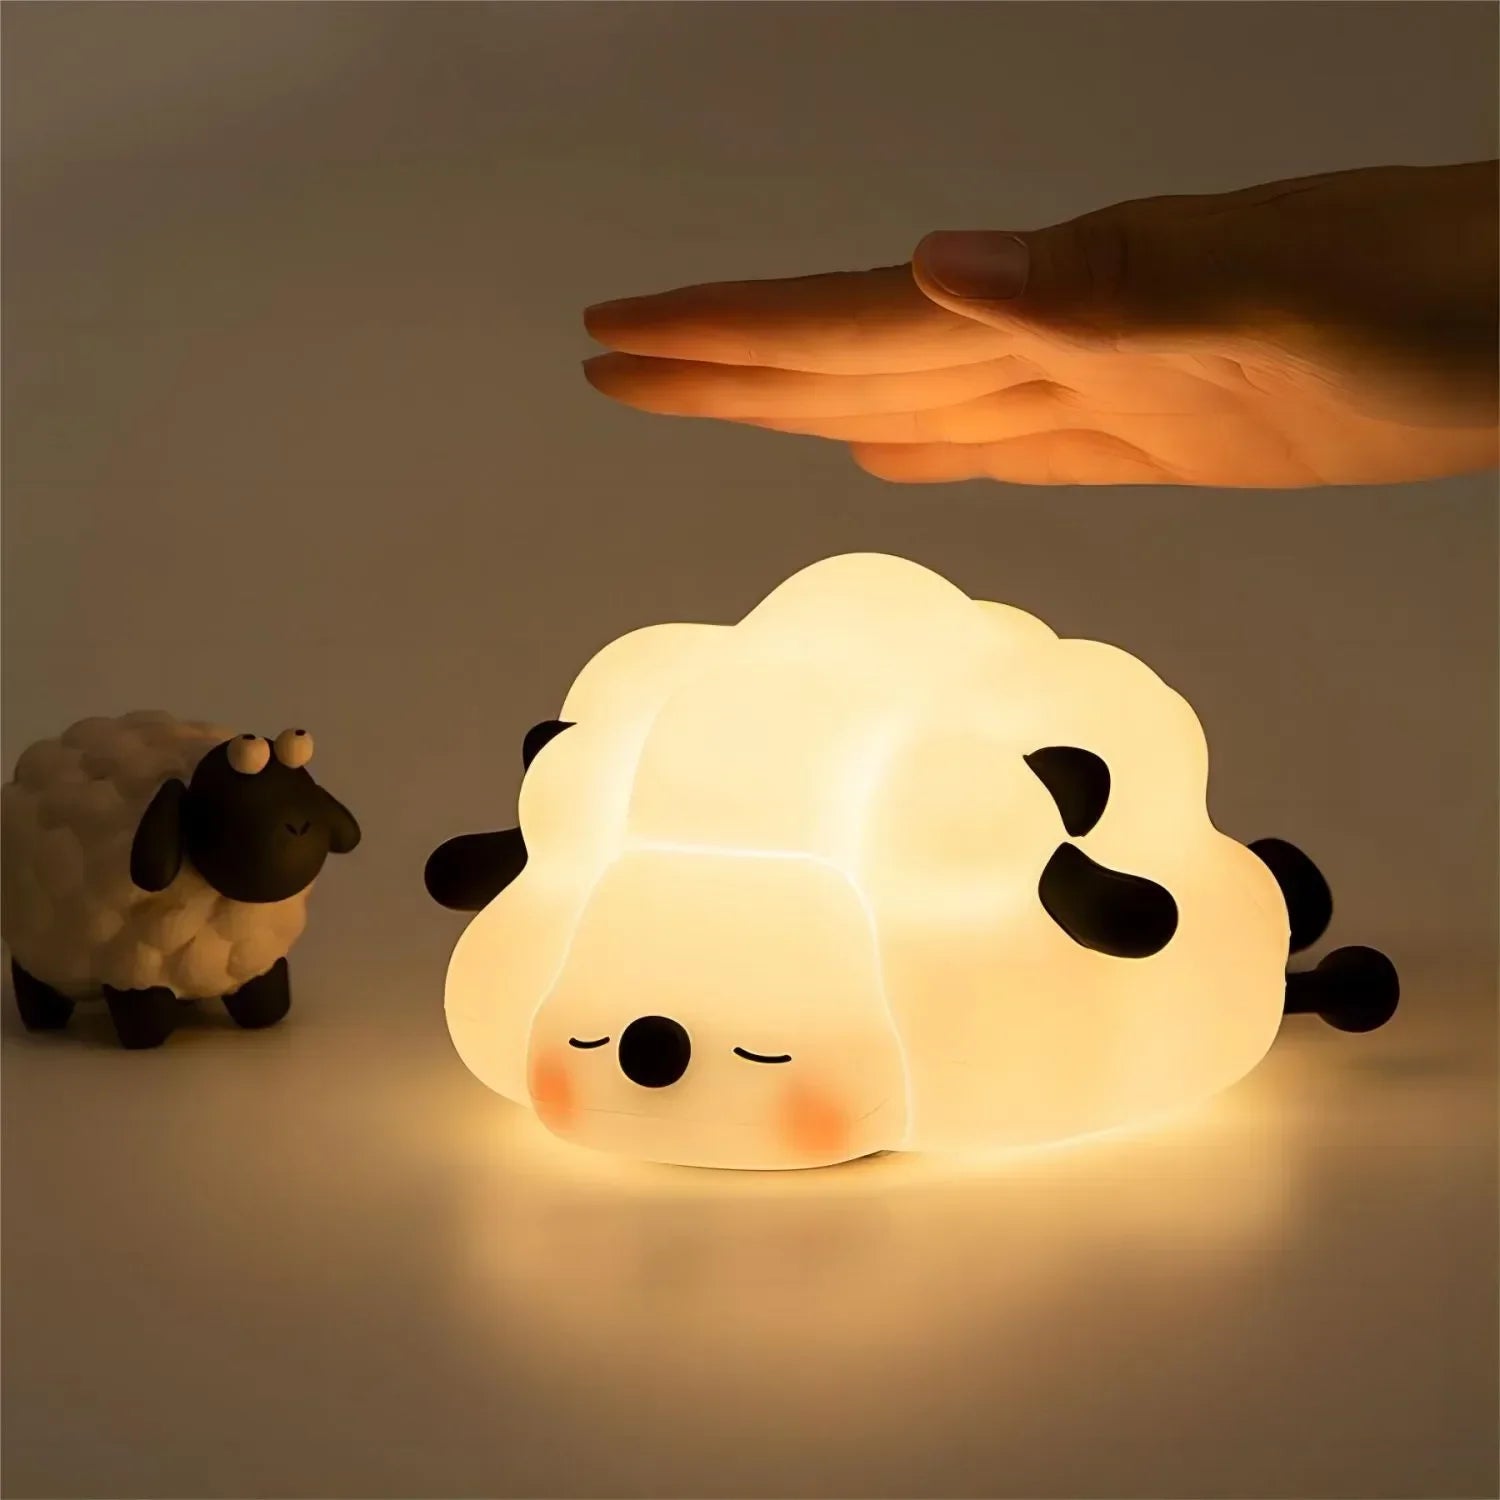 LED Cute Sheep Night Light USB Silicone Night Lamp Rechargeable Touch Sensor Nightlight Panda Rabbit Lamp for Kids Bedroom Decor